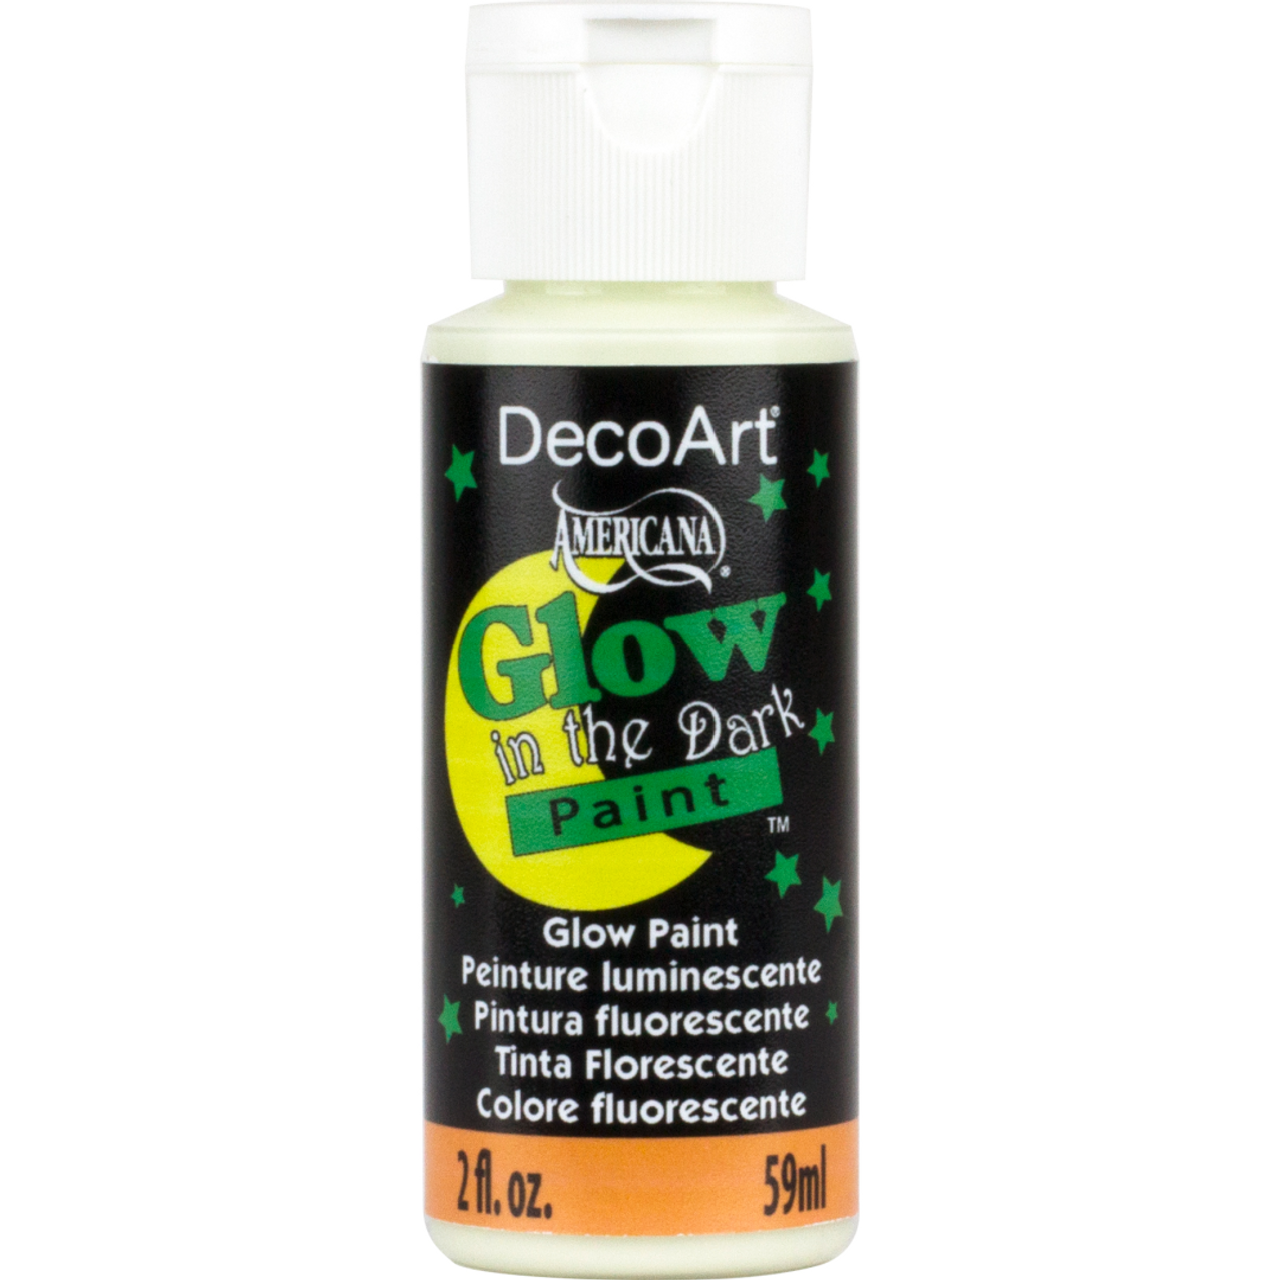 Midnight Glo UV Neon Face & Body Paint Glow Kit (7 Bottles 2 oz. Each) Black  Light Reactive Fluorescent Paint - Safe, Washes Off Skin, Non-Toxic